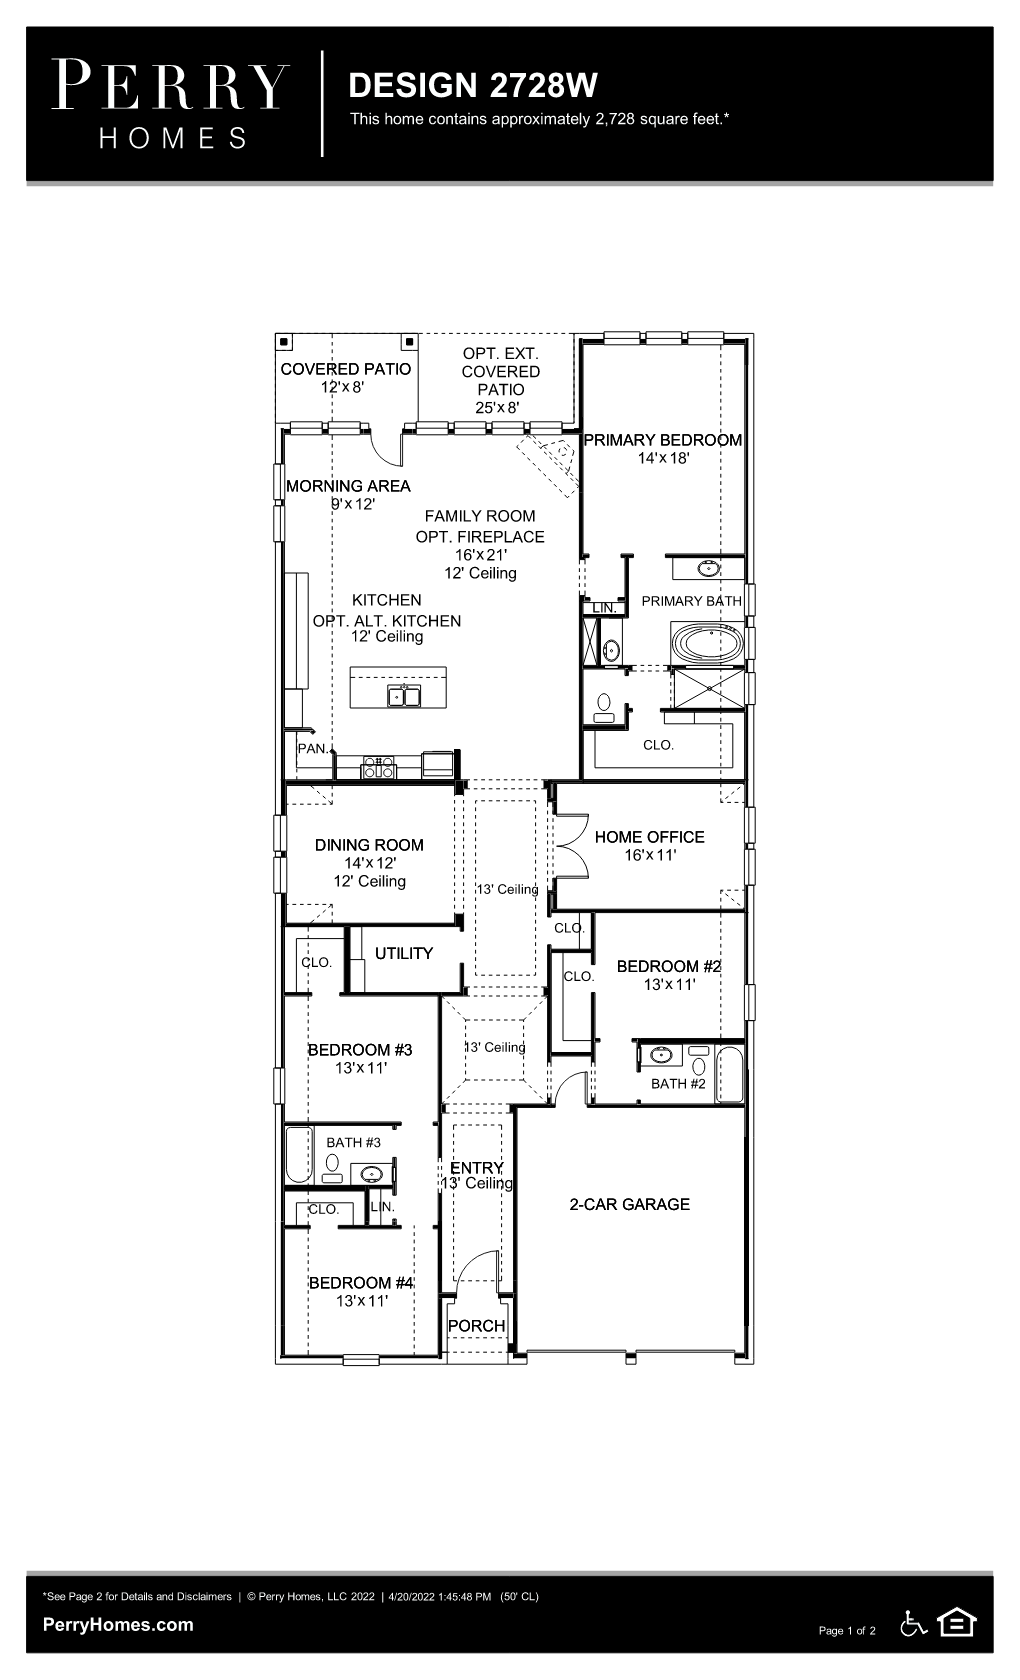 Floor Plan for 2728W